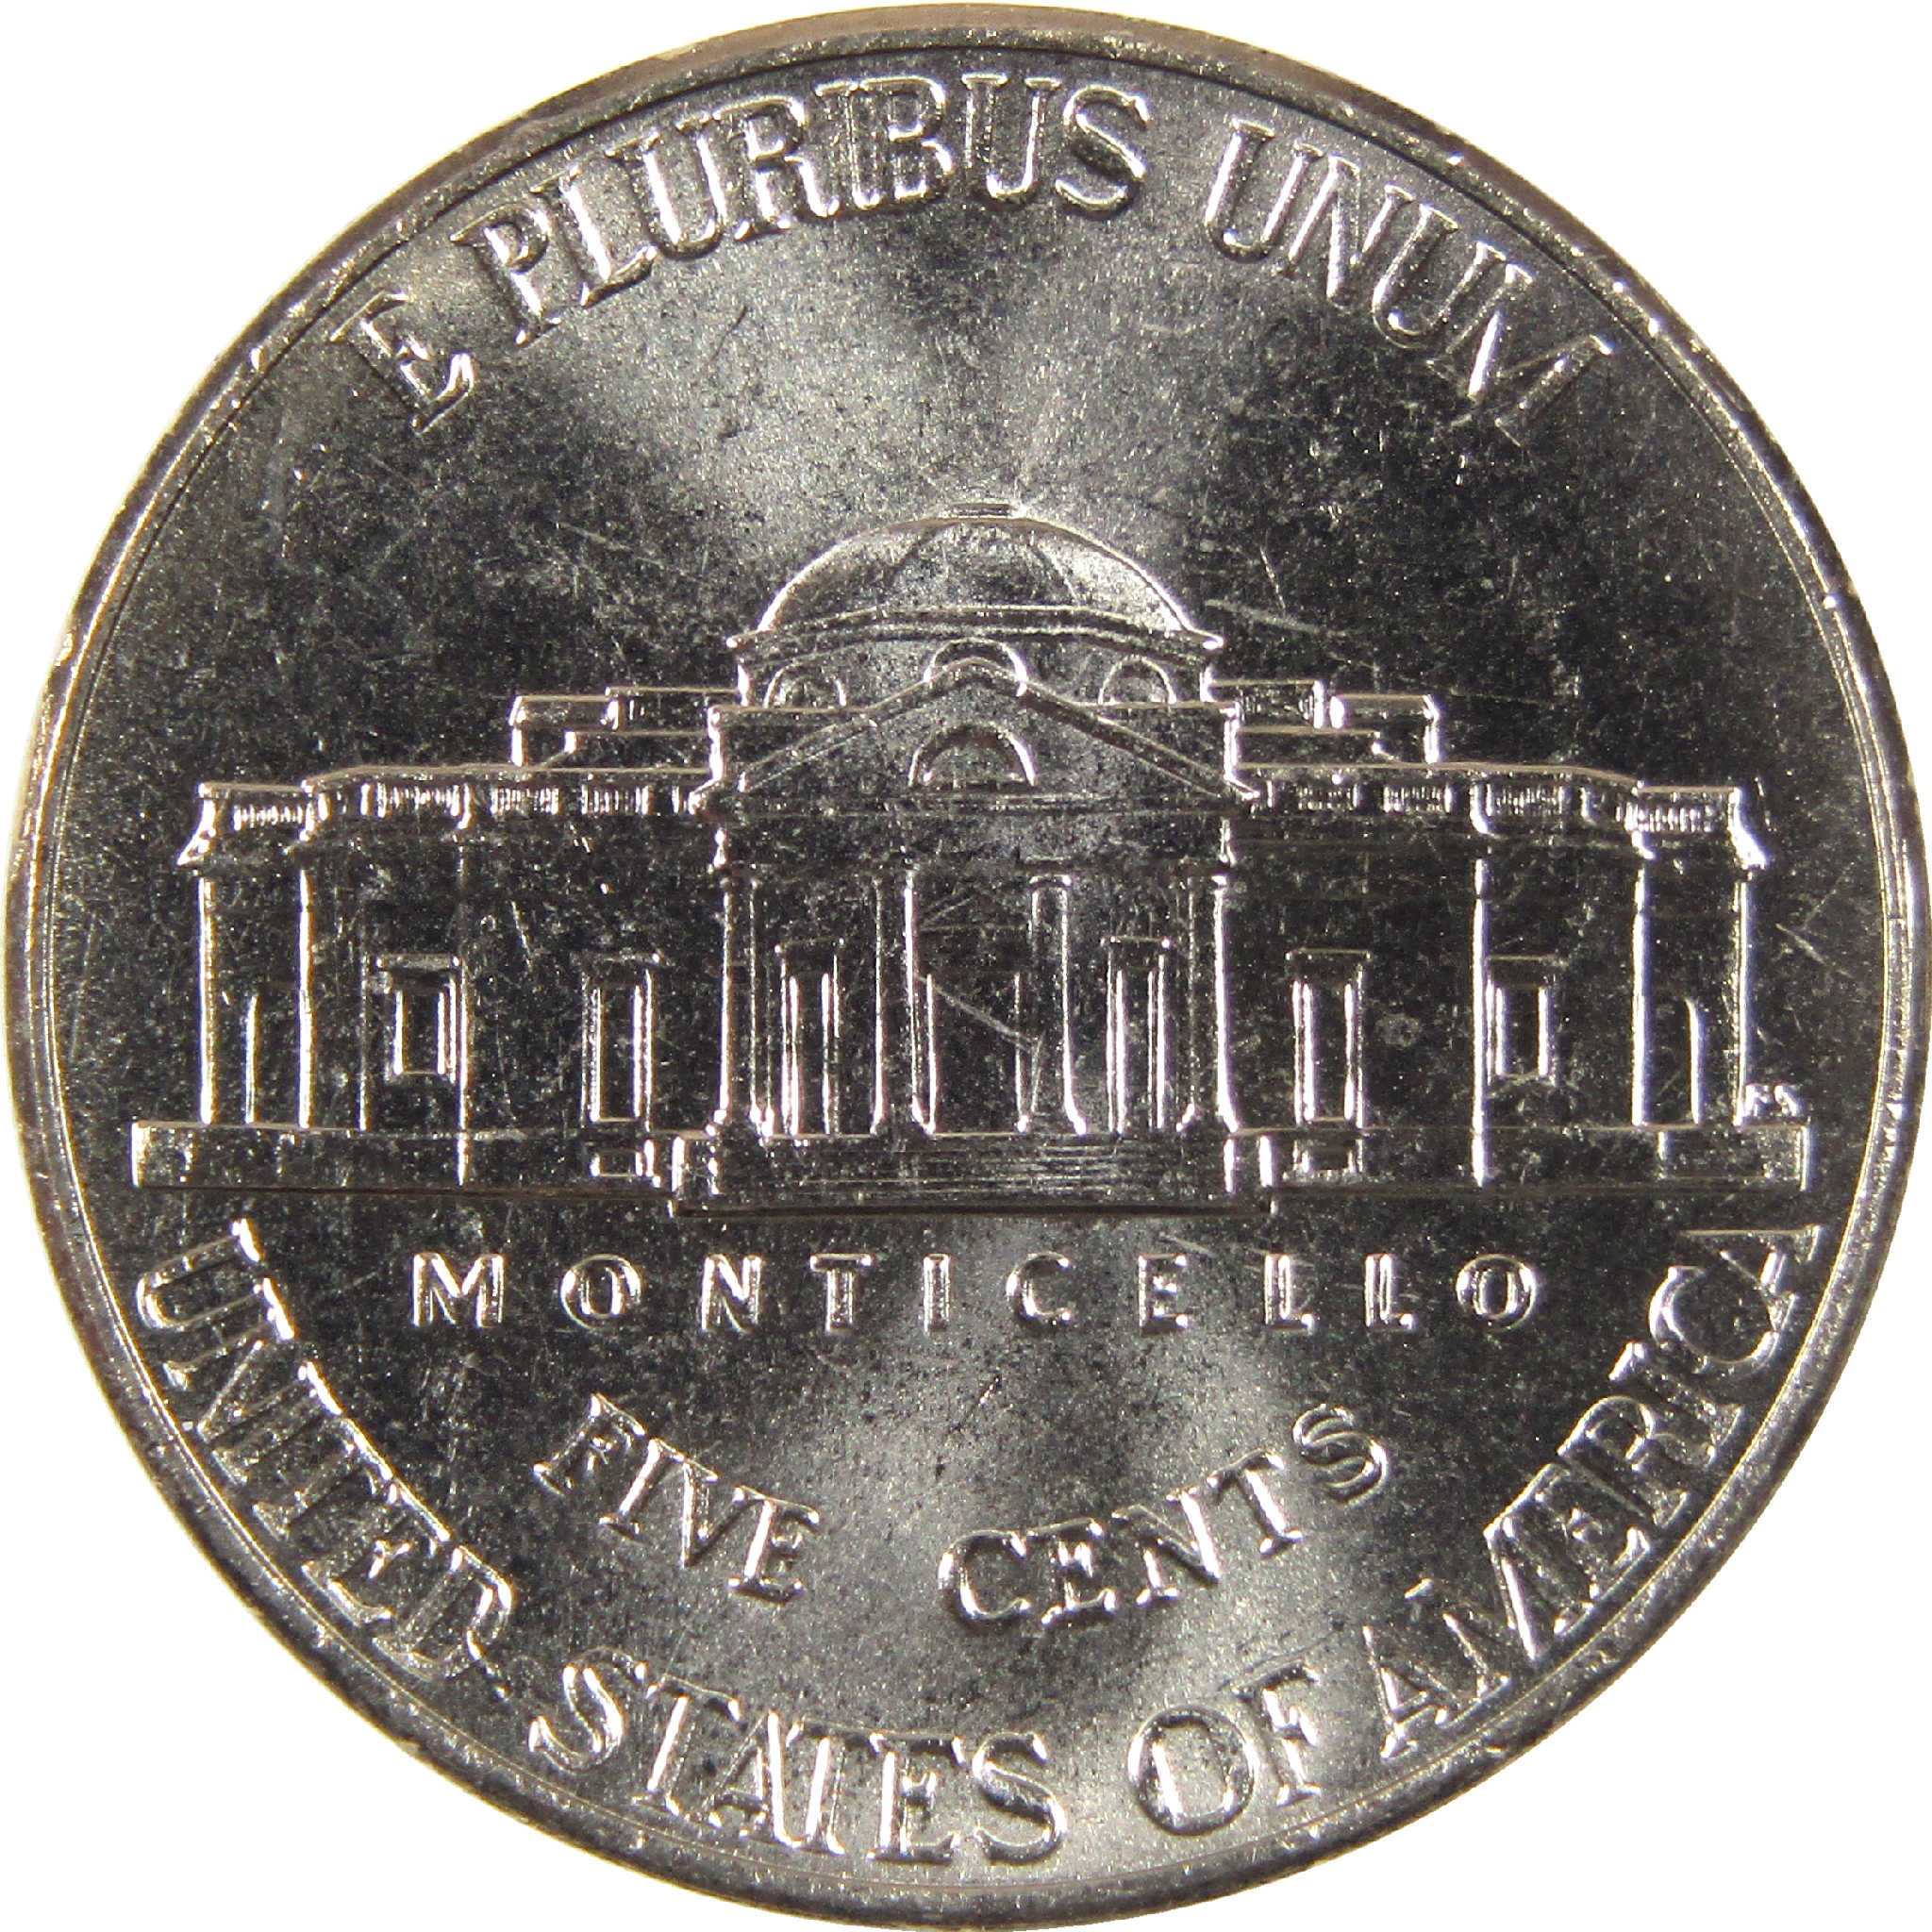 2007 D Jefferson Nickel BU Uncirculated 5c Coin